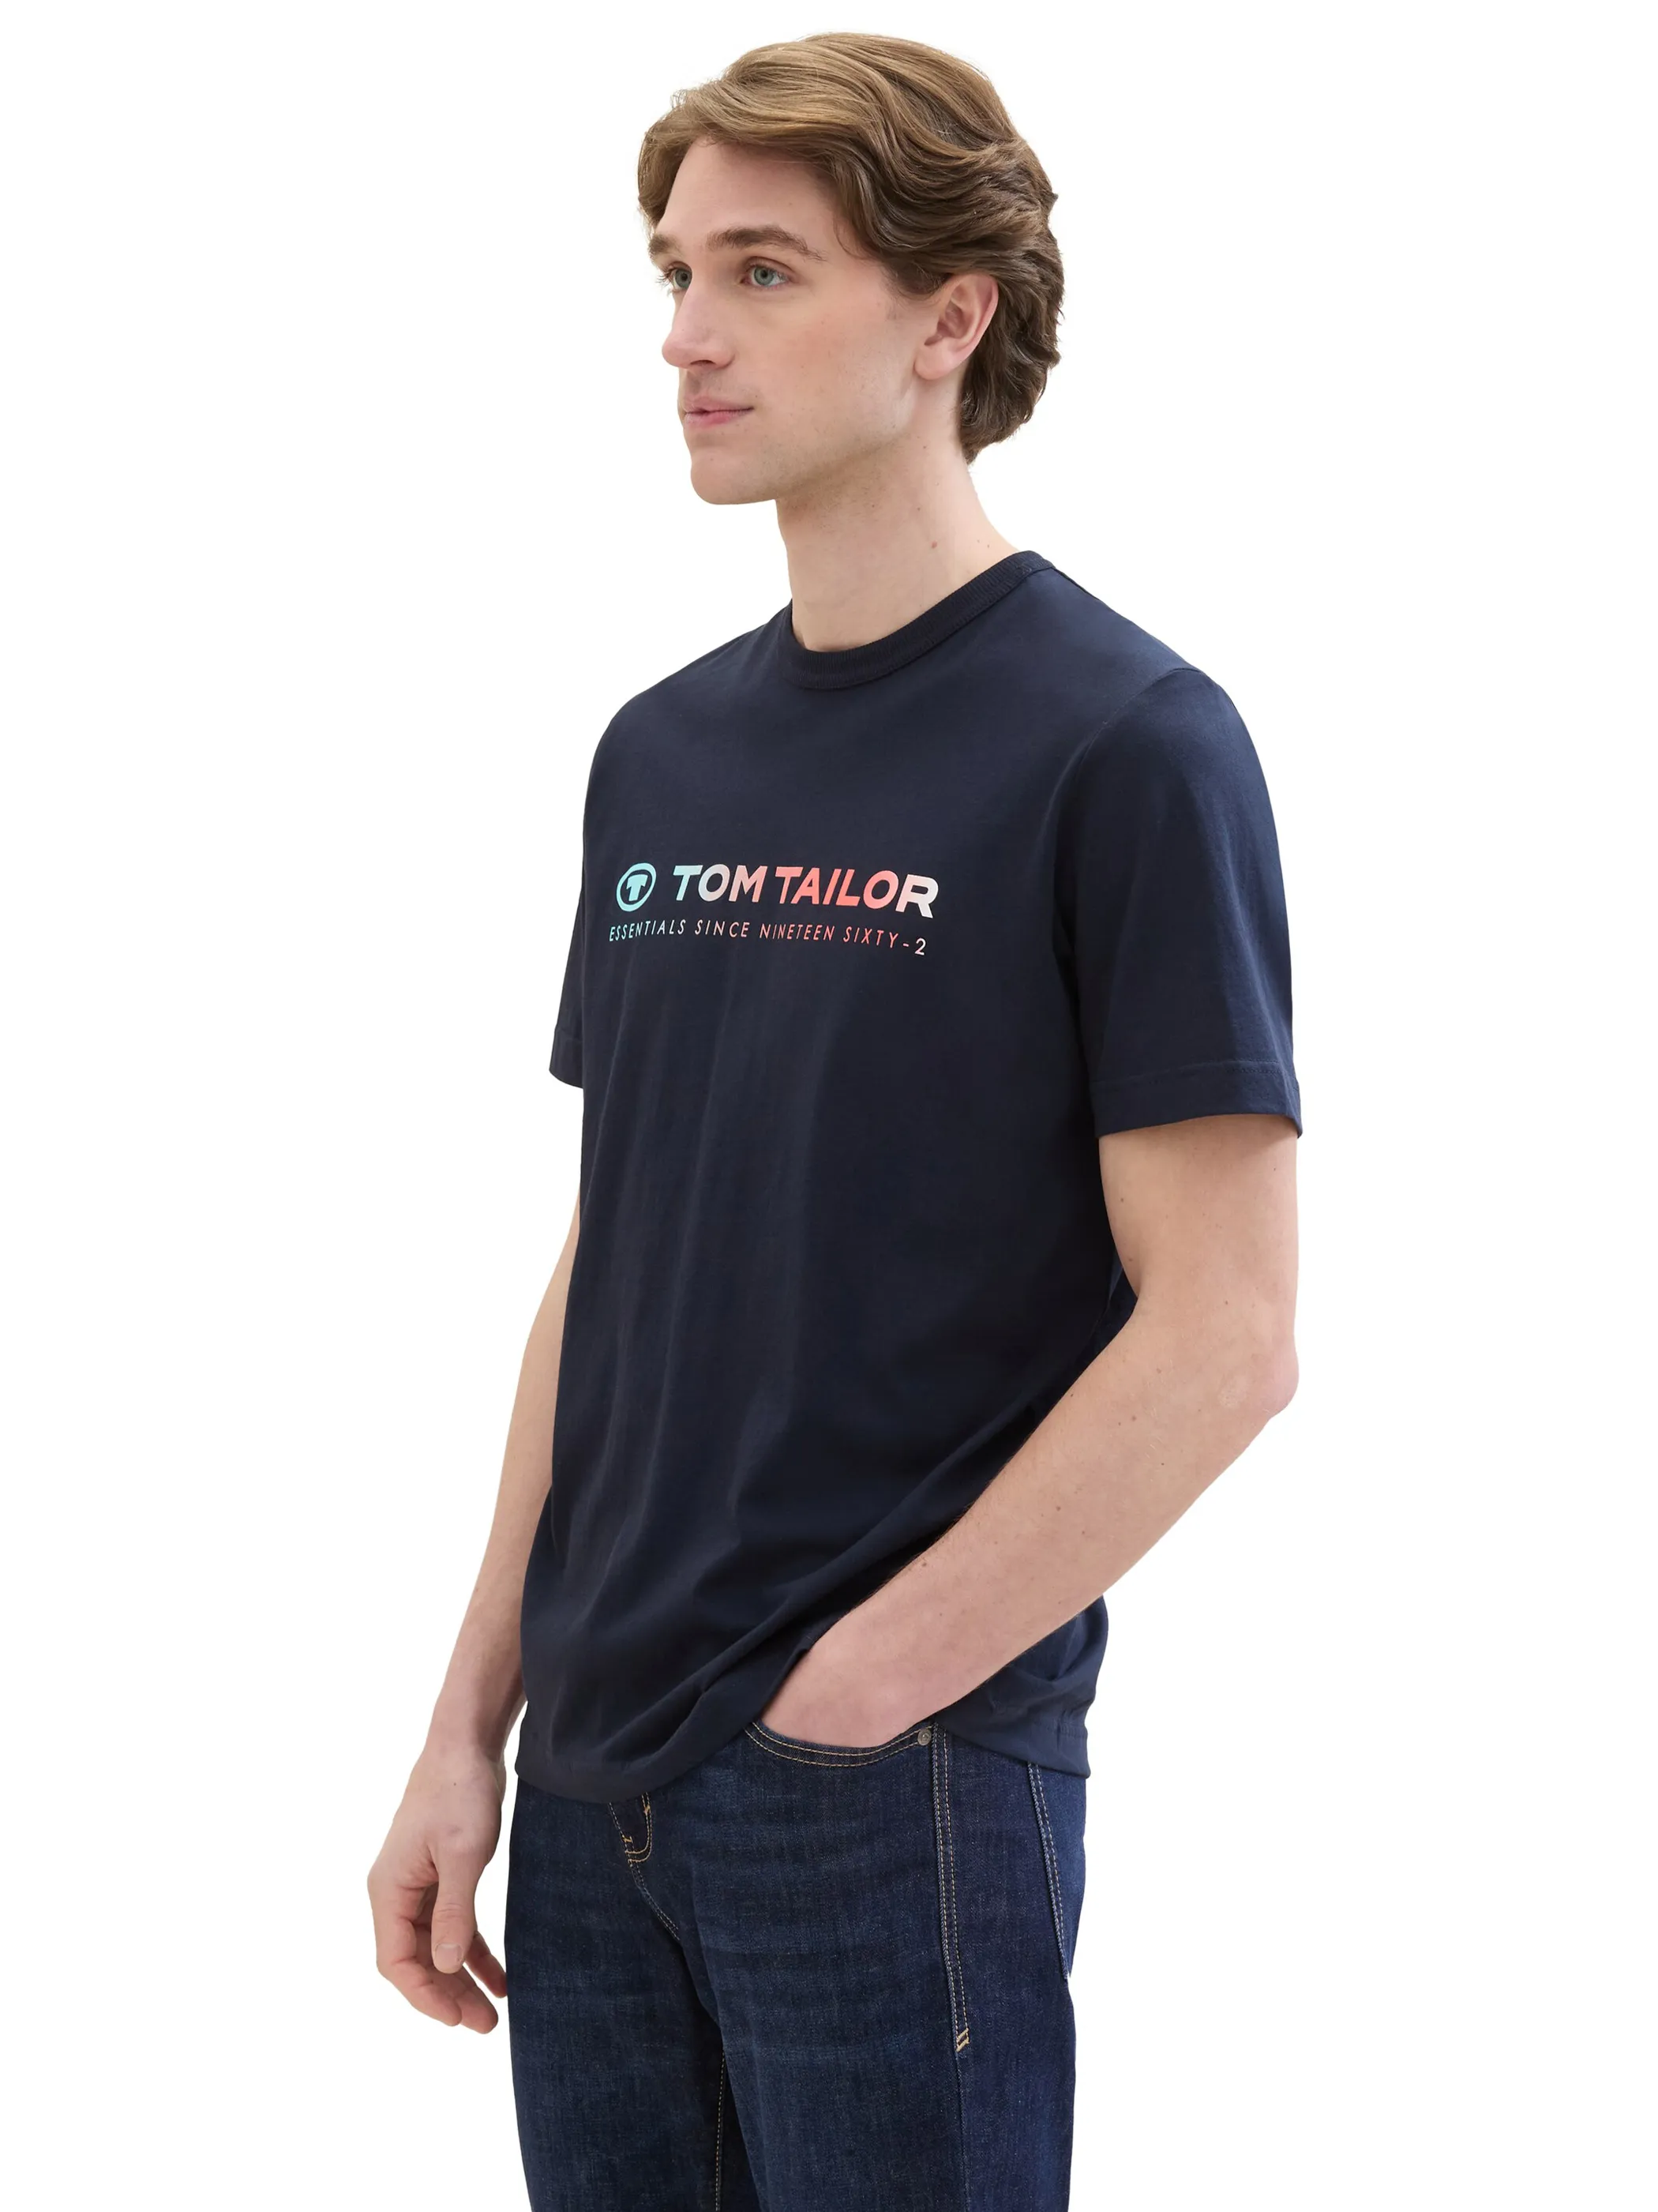 Tom Tailor 1041855 printed t-shirt Blau 895629 10668 3